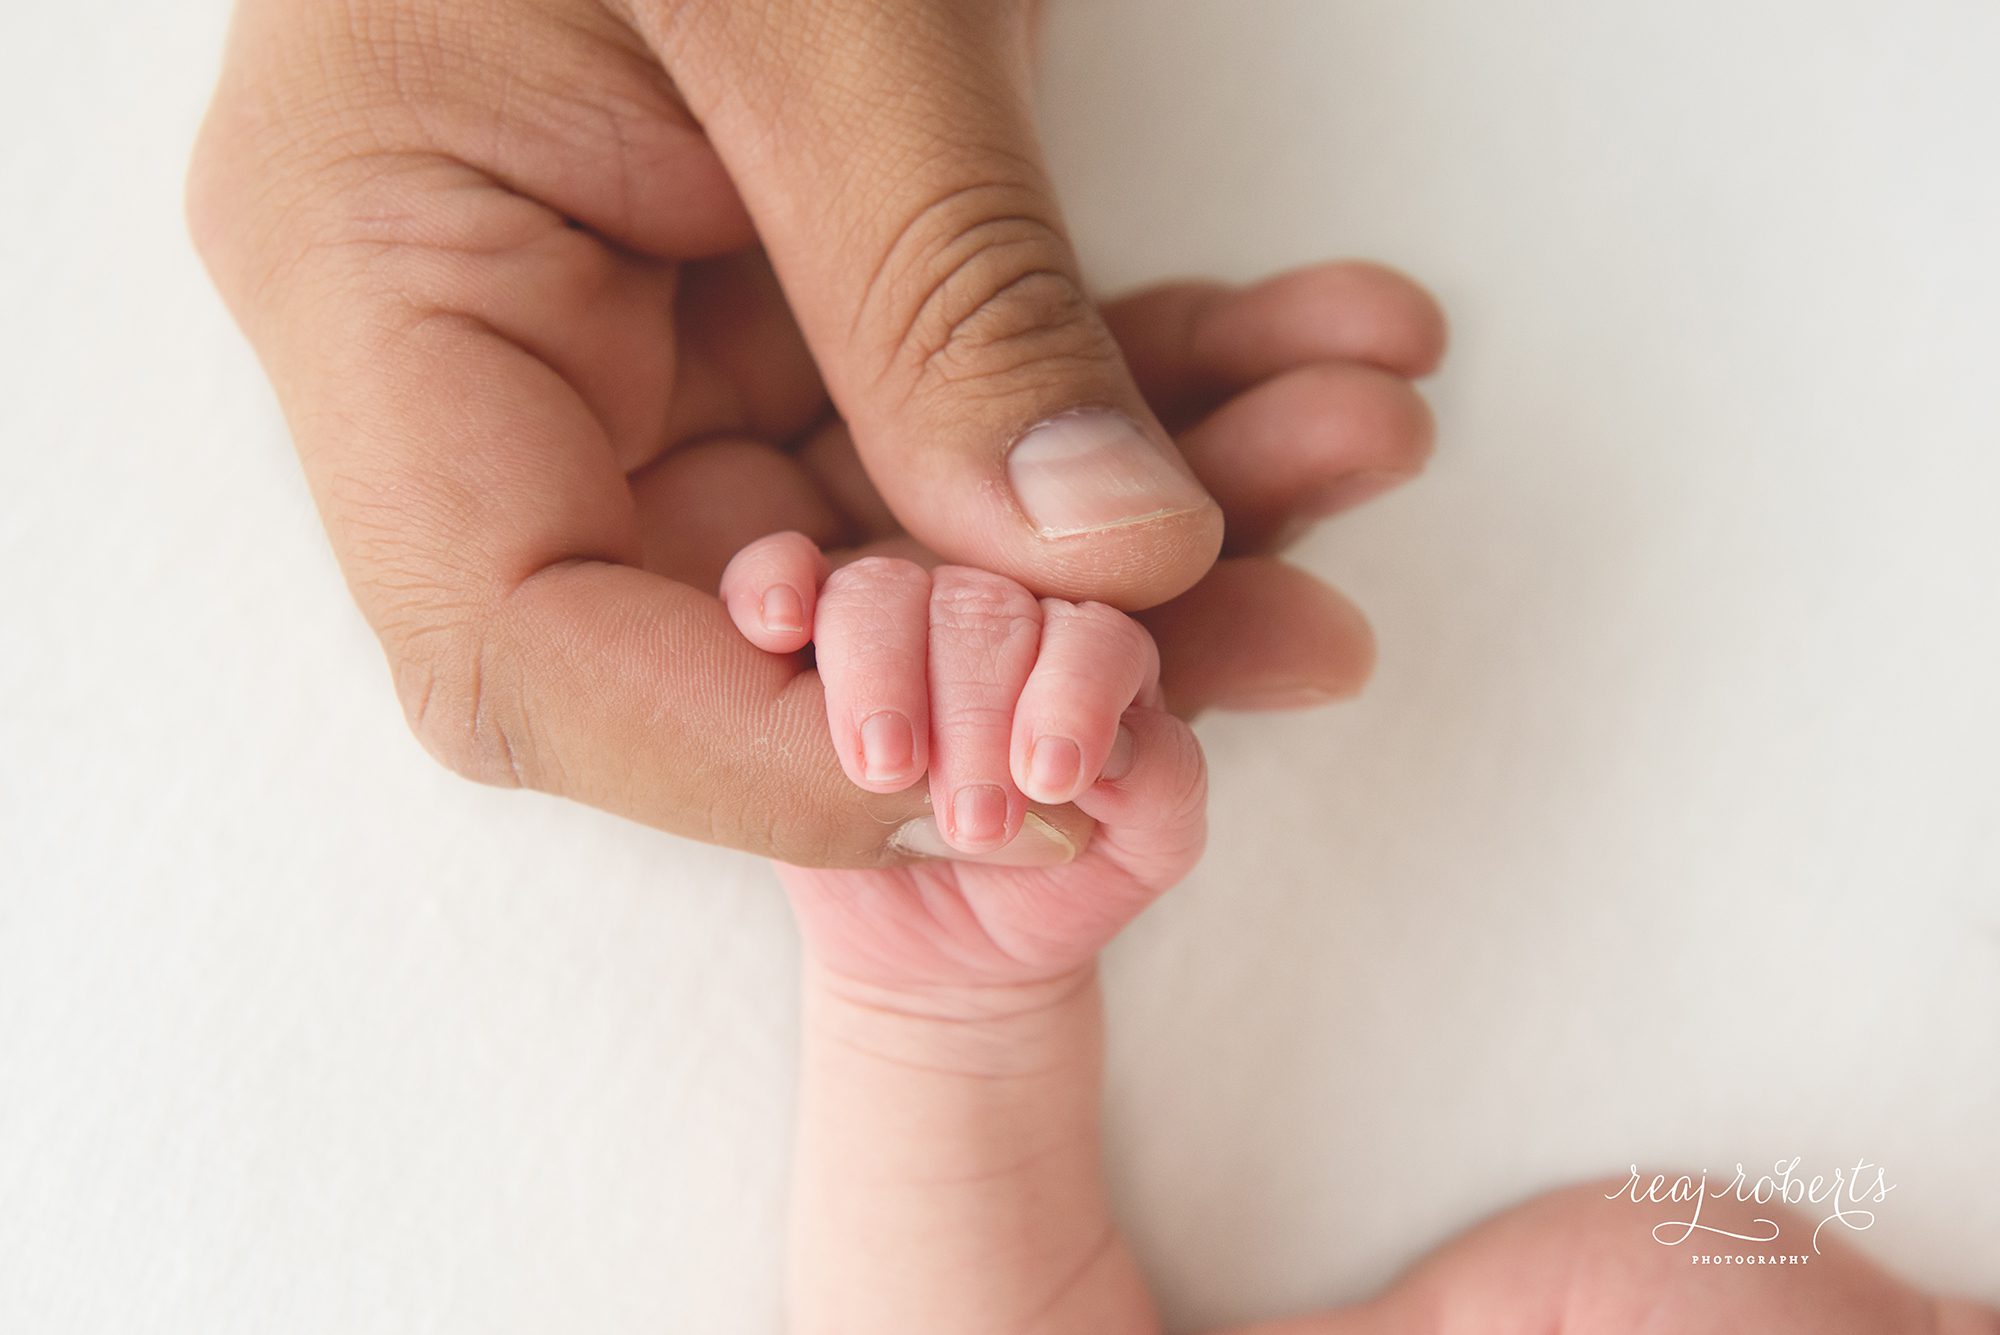 Newborn Baby Hands & Fingers | Reaj Roberts Photography